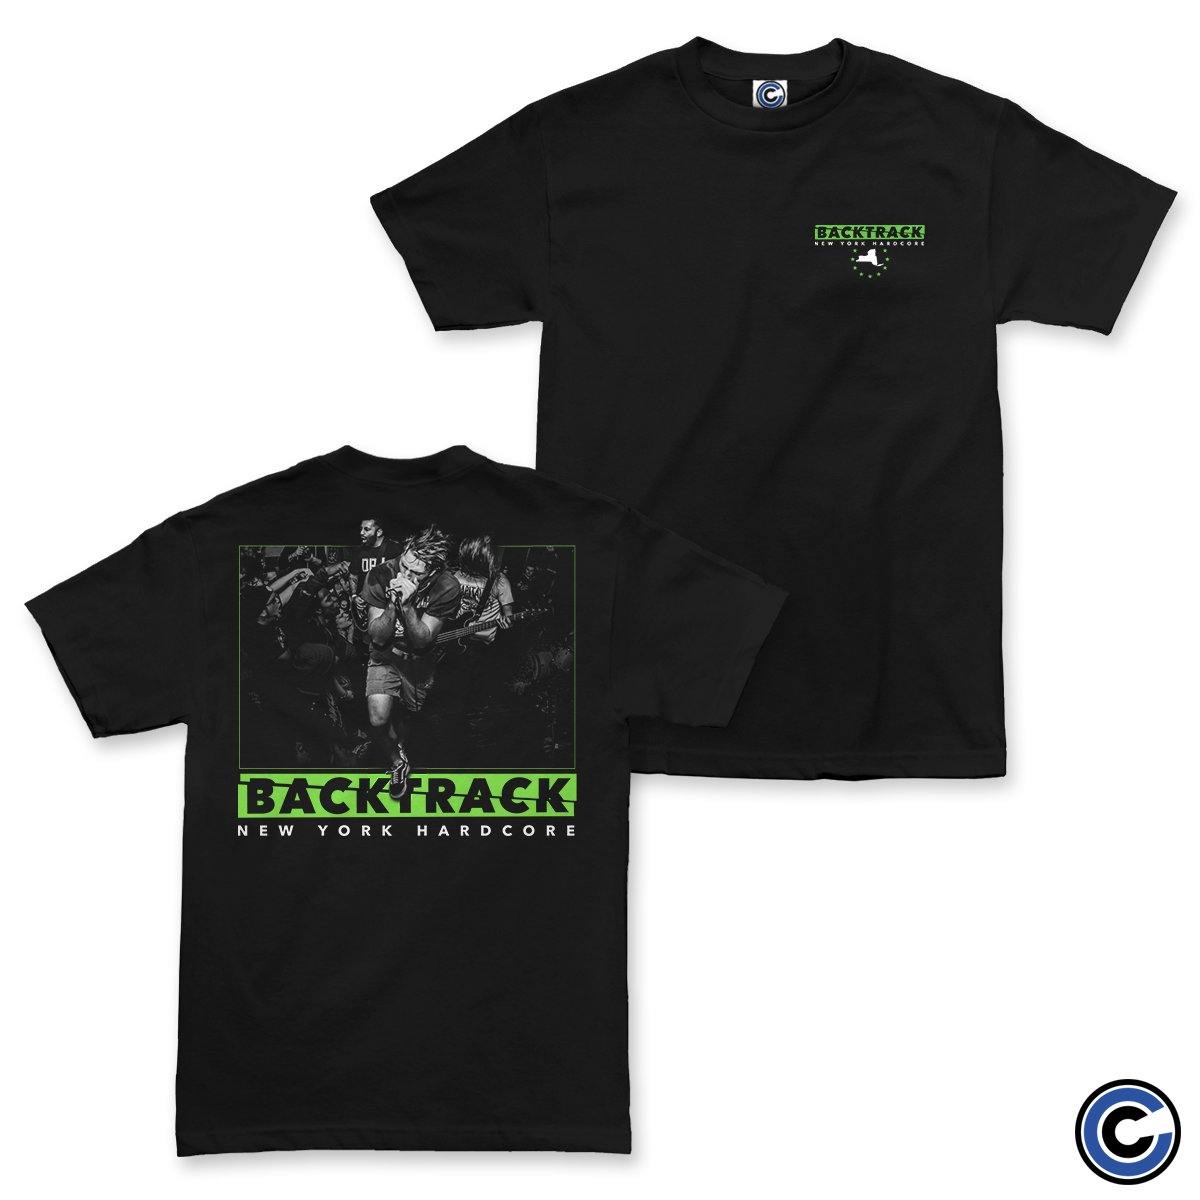 Buy – Backtrack "New York Hardcore" Shirt – Band & Music Merch – Cold Cuts Merch